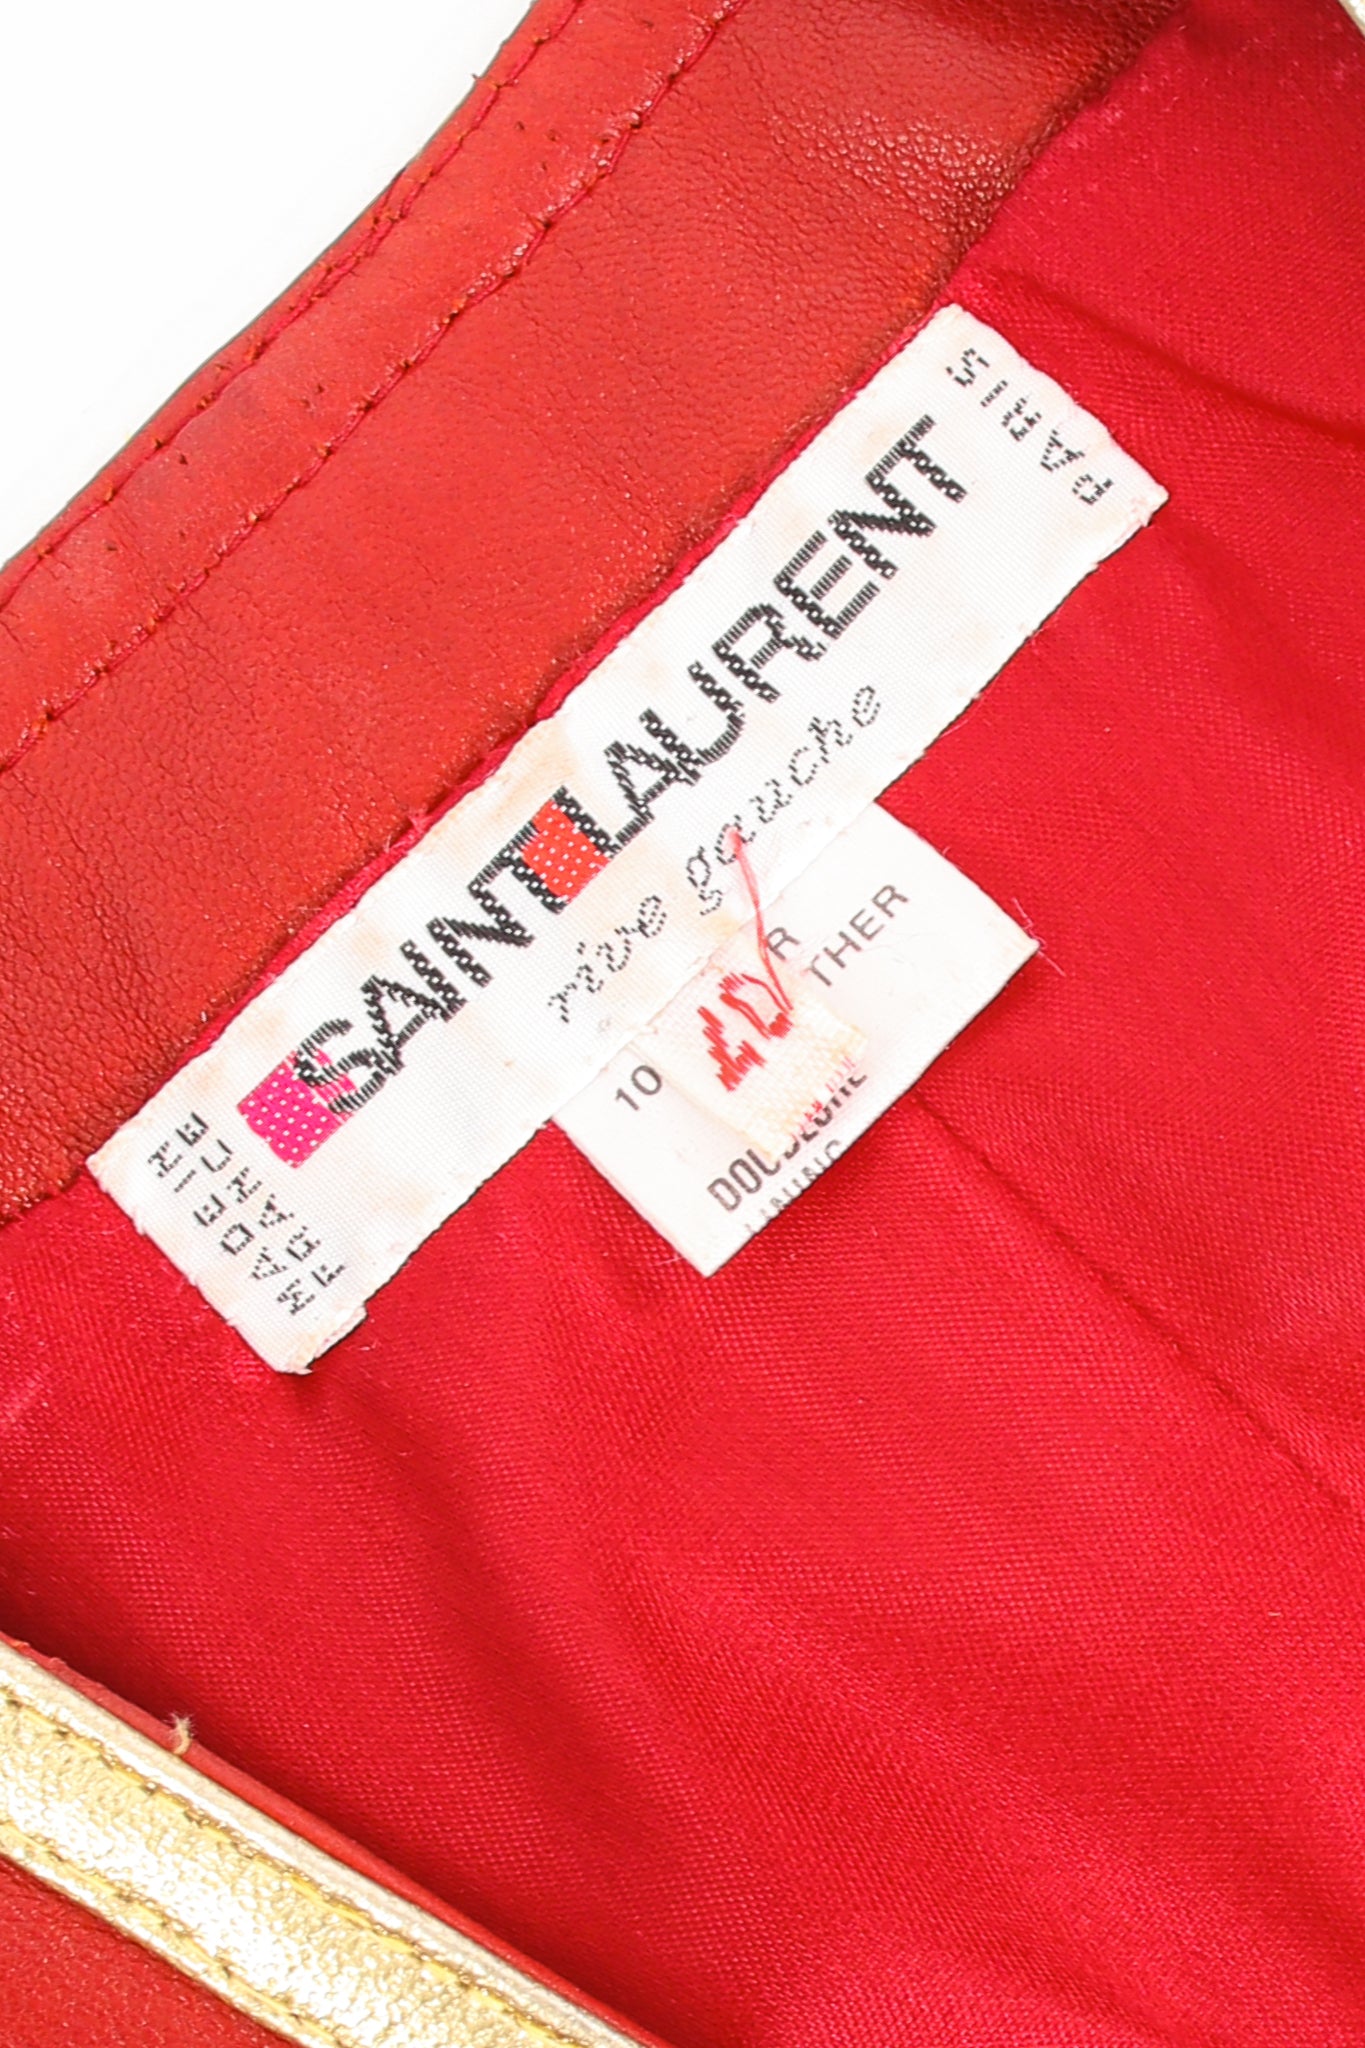 Vintage YSL Yves Saint Laurent 1988 Red Leather Skirt Suit Jacket label at Recess Los Angeles